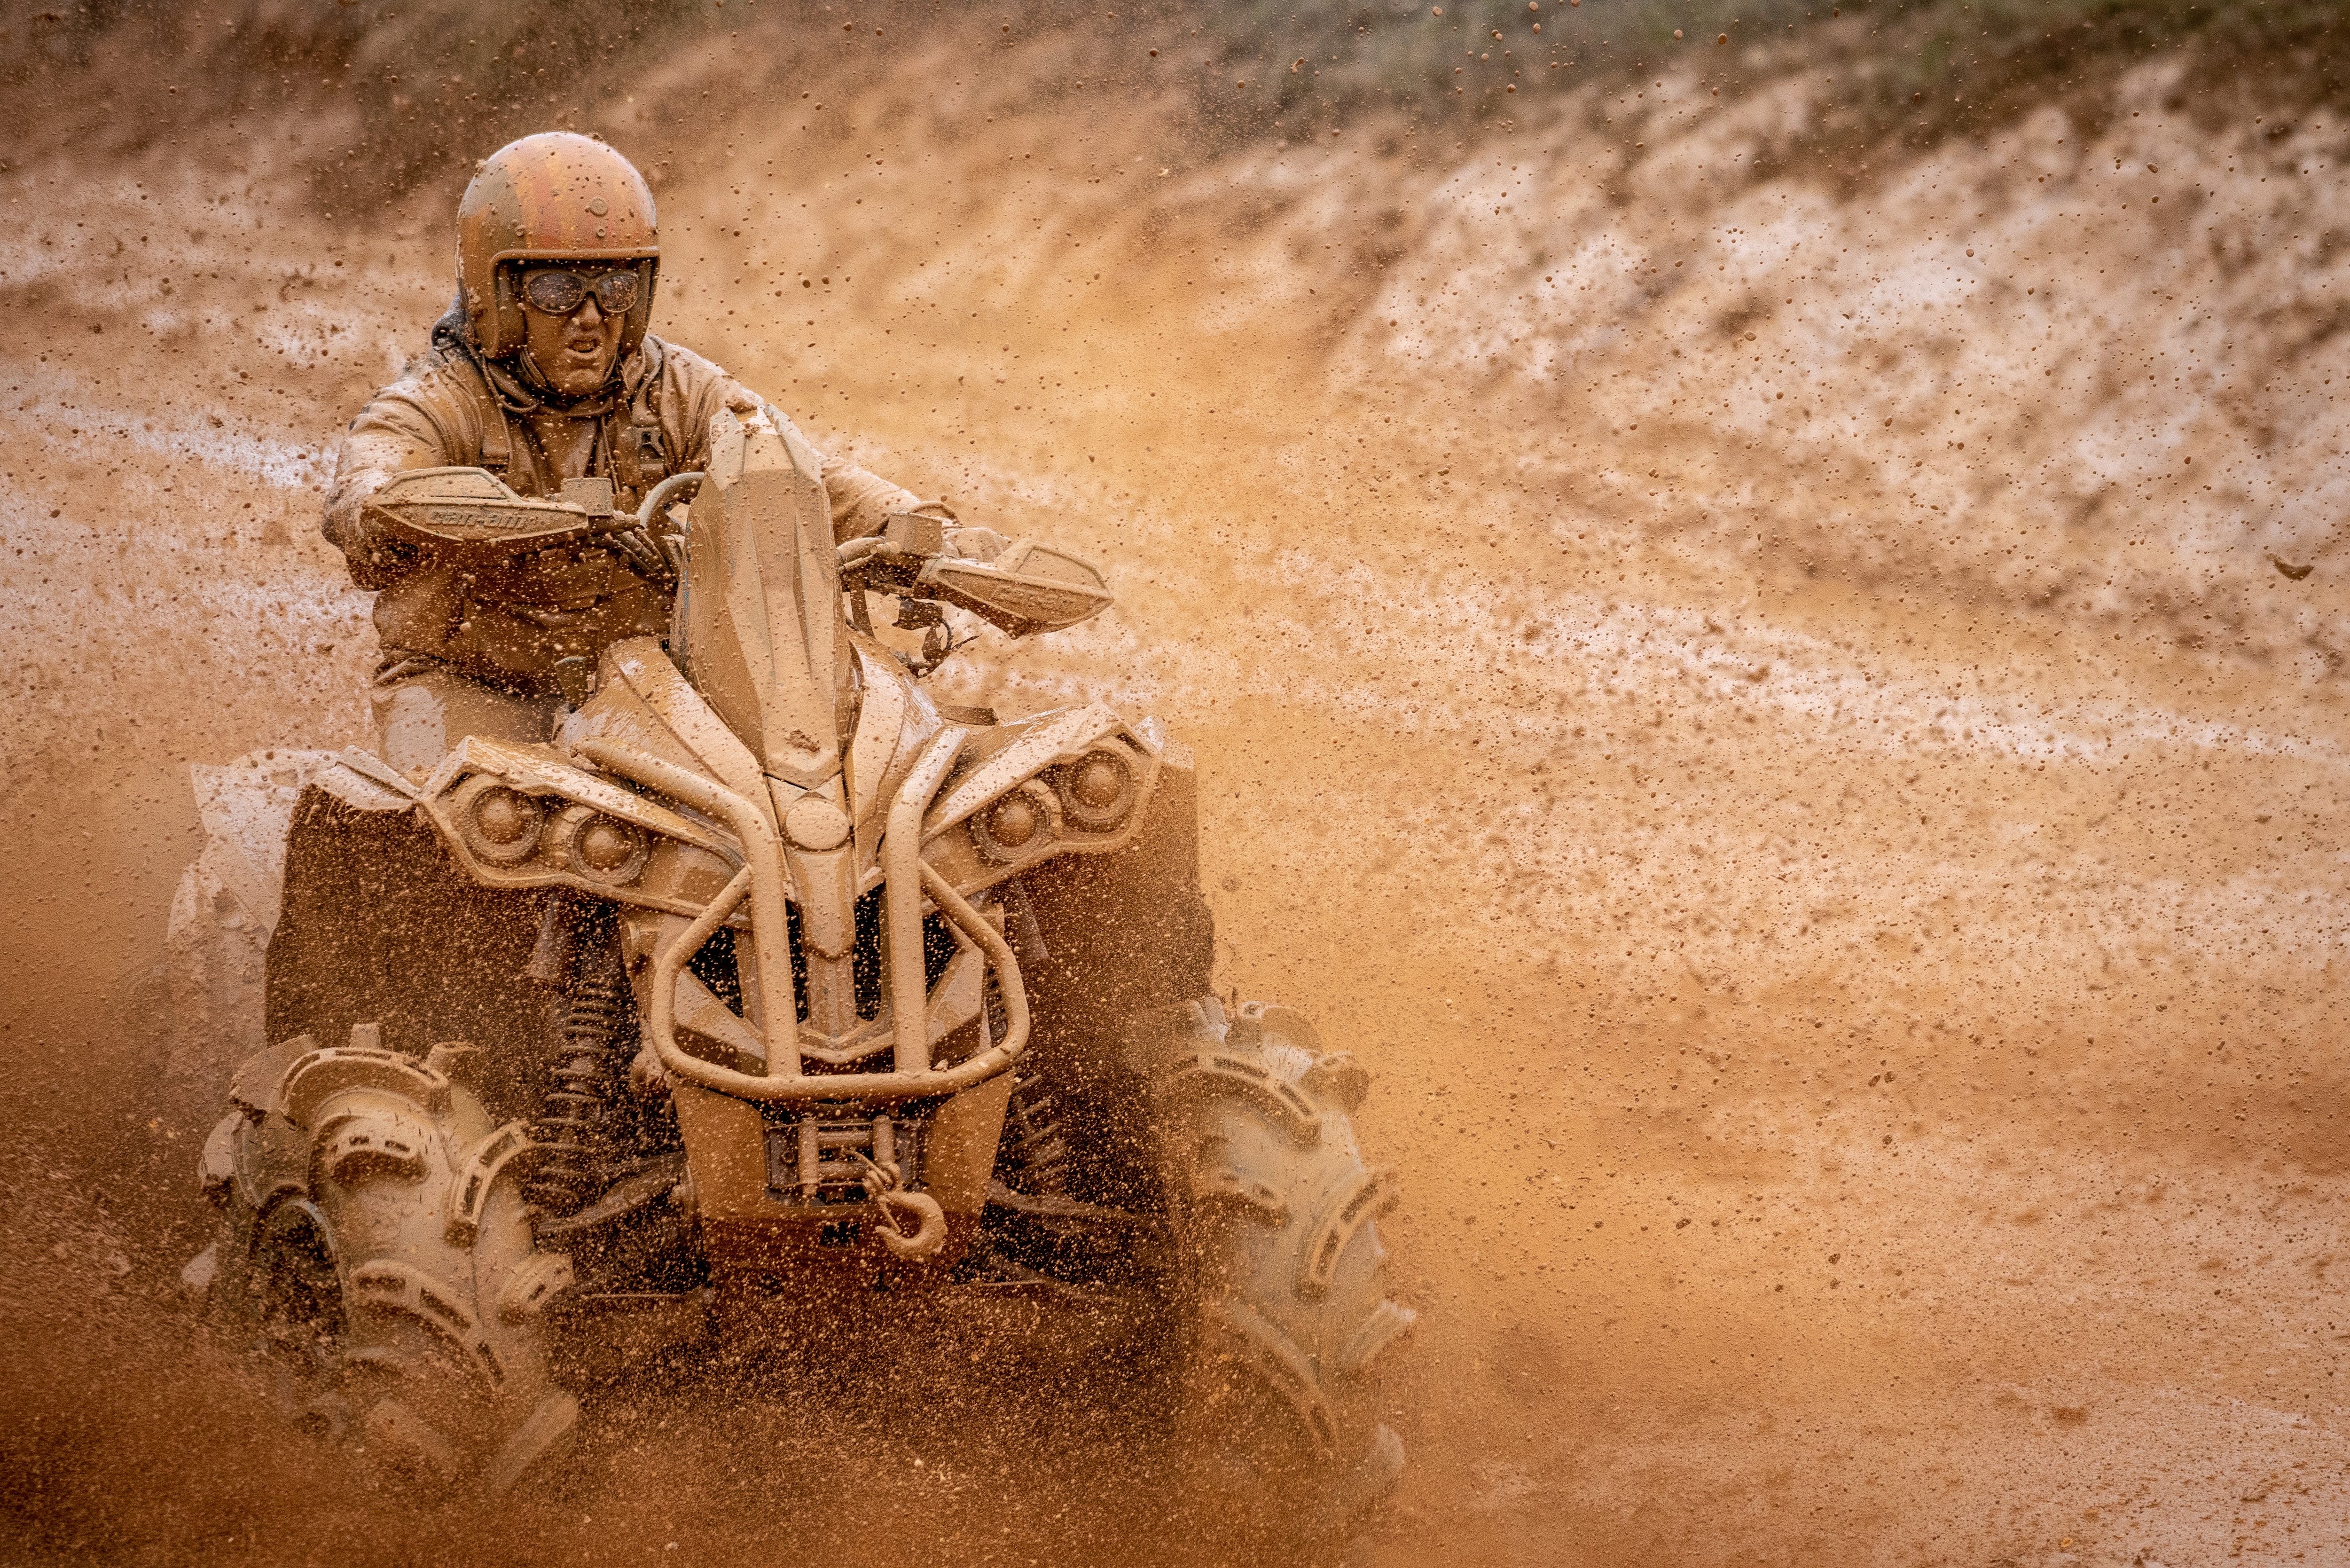  Čovjek prekriven blatom vozi svoj Renegade ATV po blatnjavoj stazi